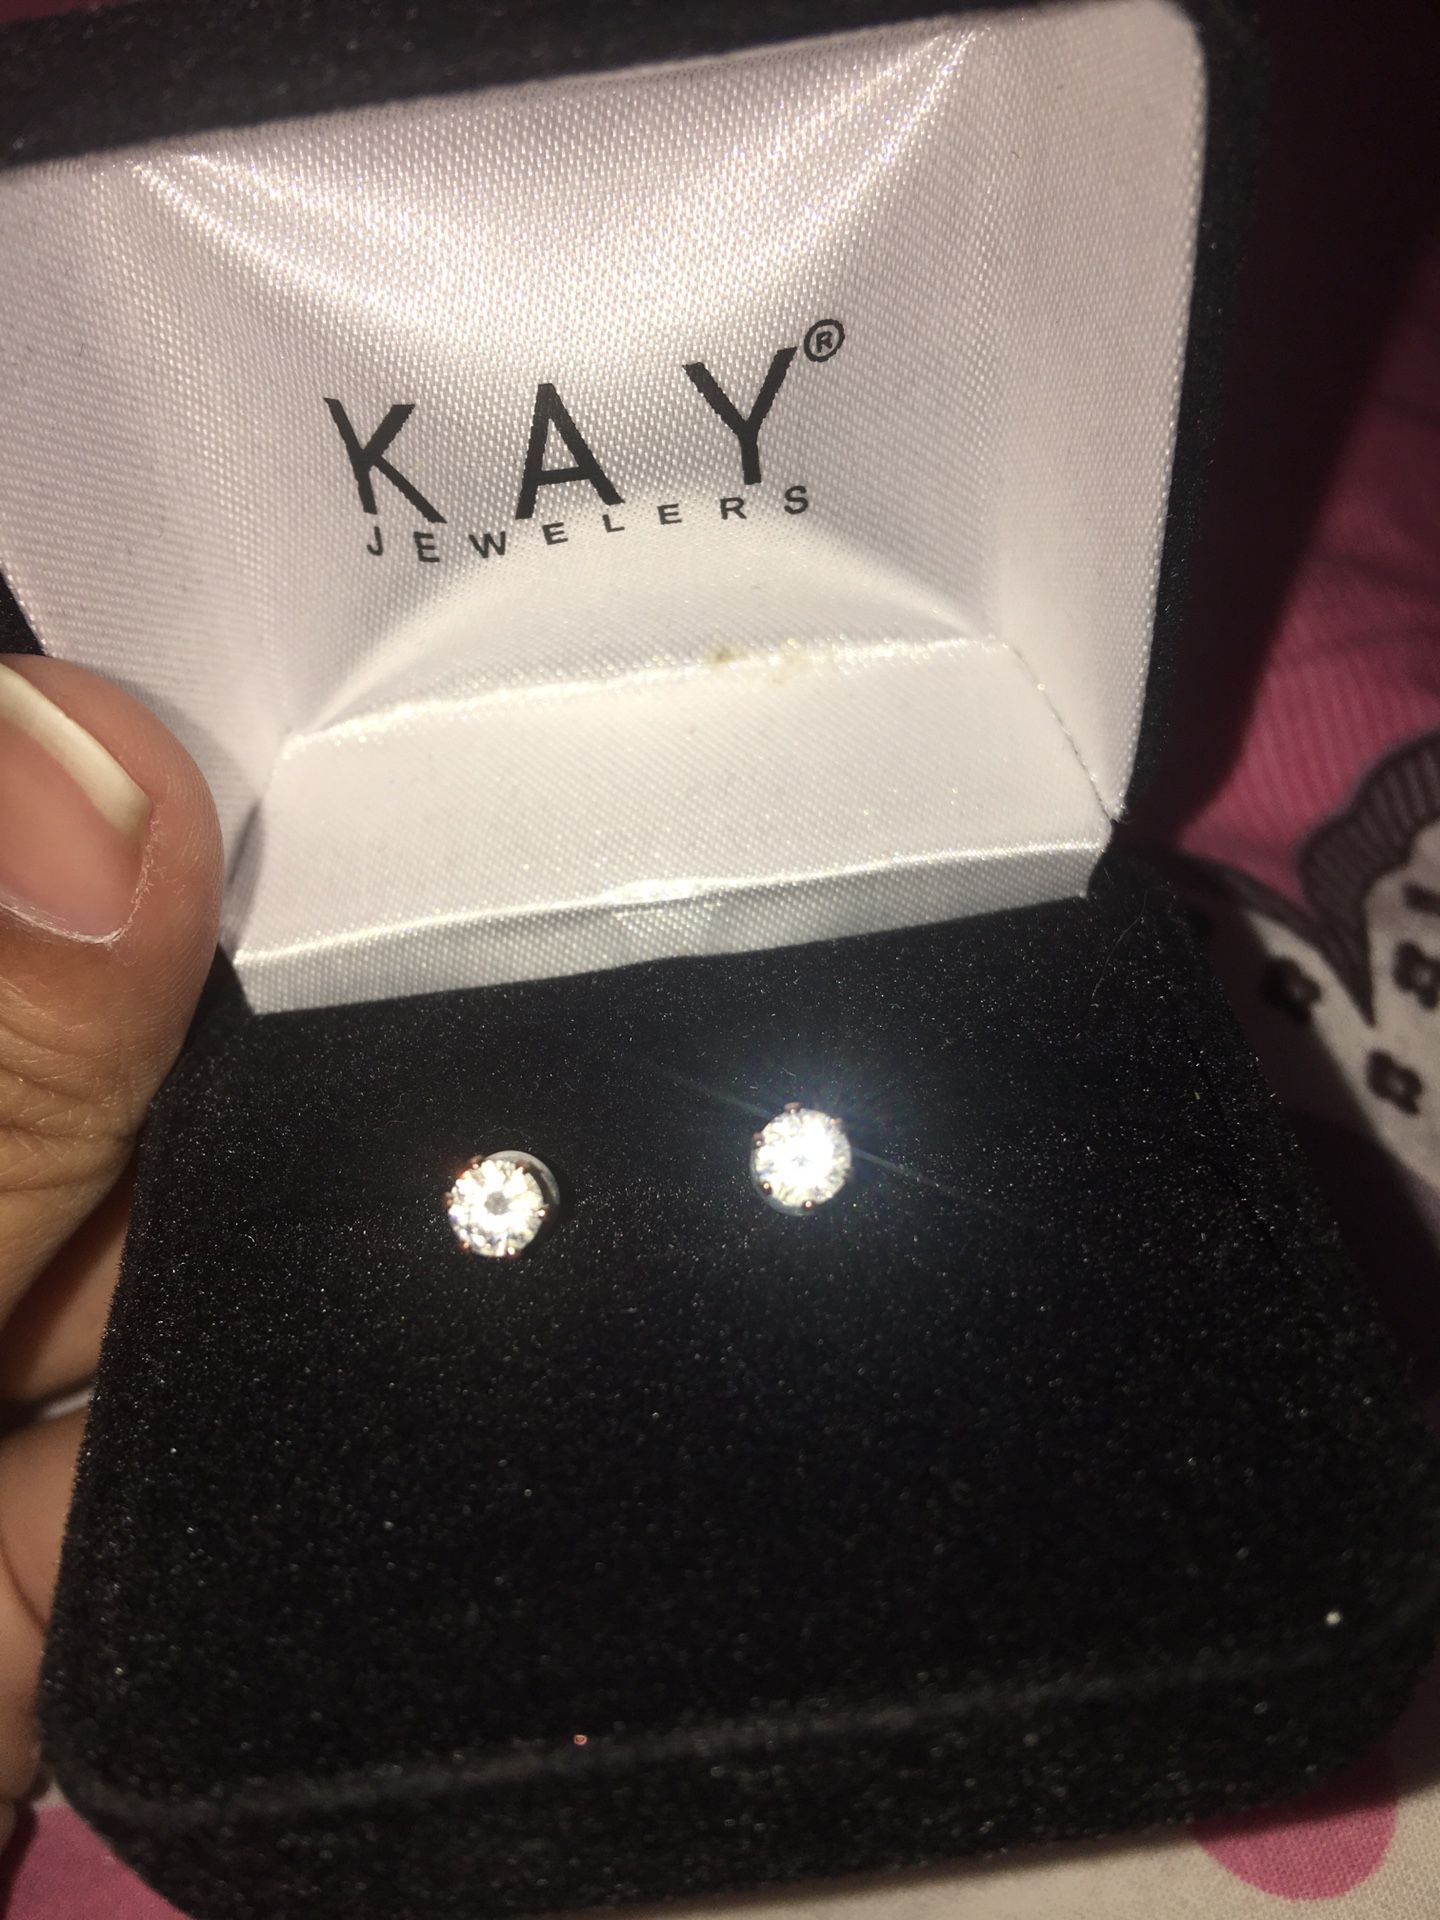 Authentic Kay jewelers stud earrings